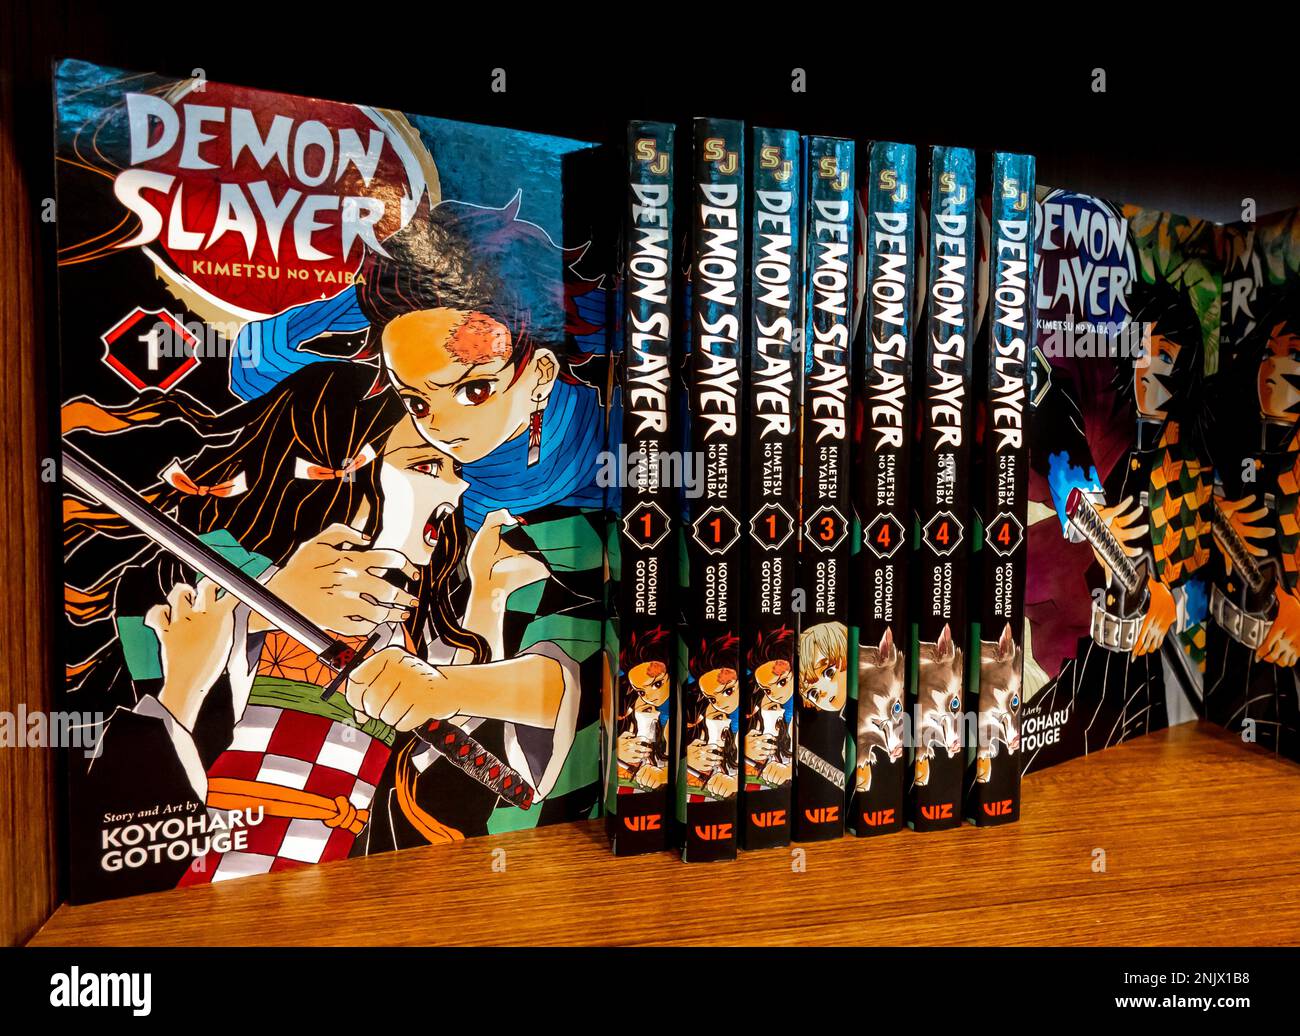 Demon slayer manga hi-res stock photography and images - Alamy